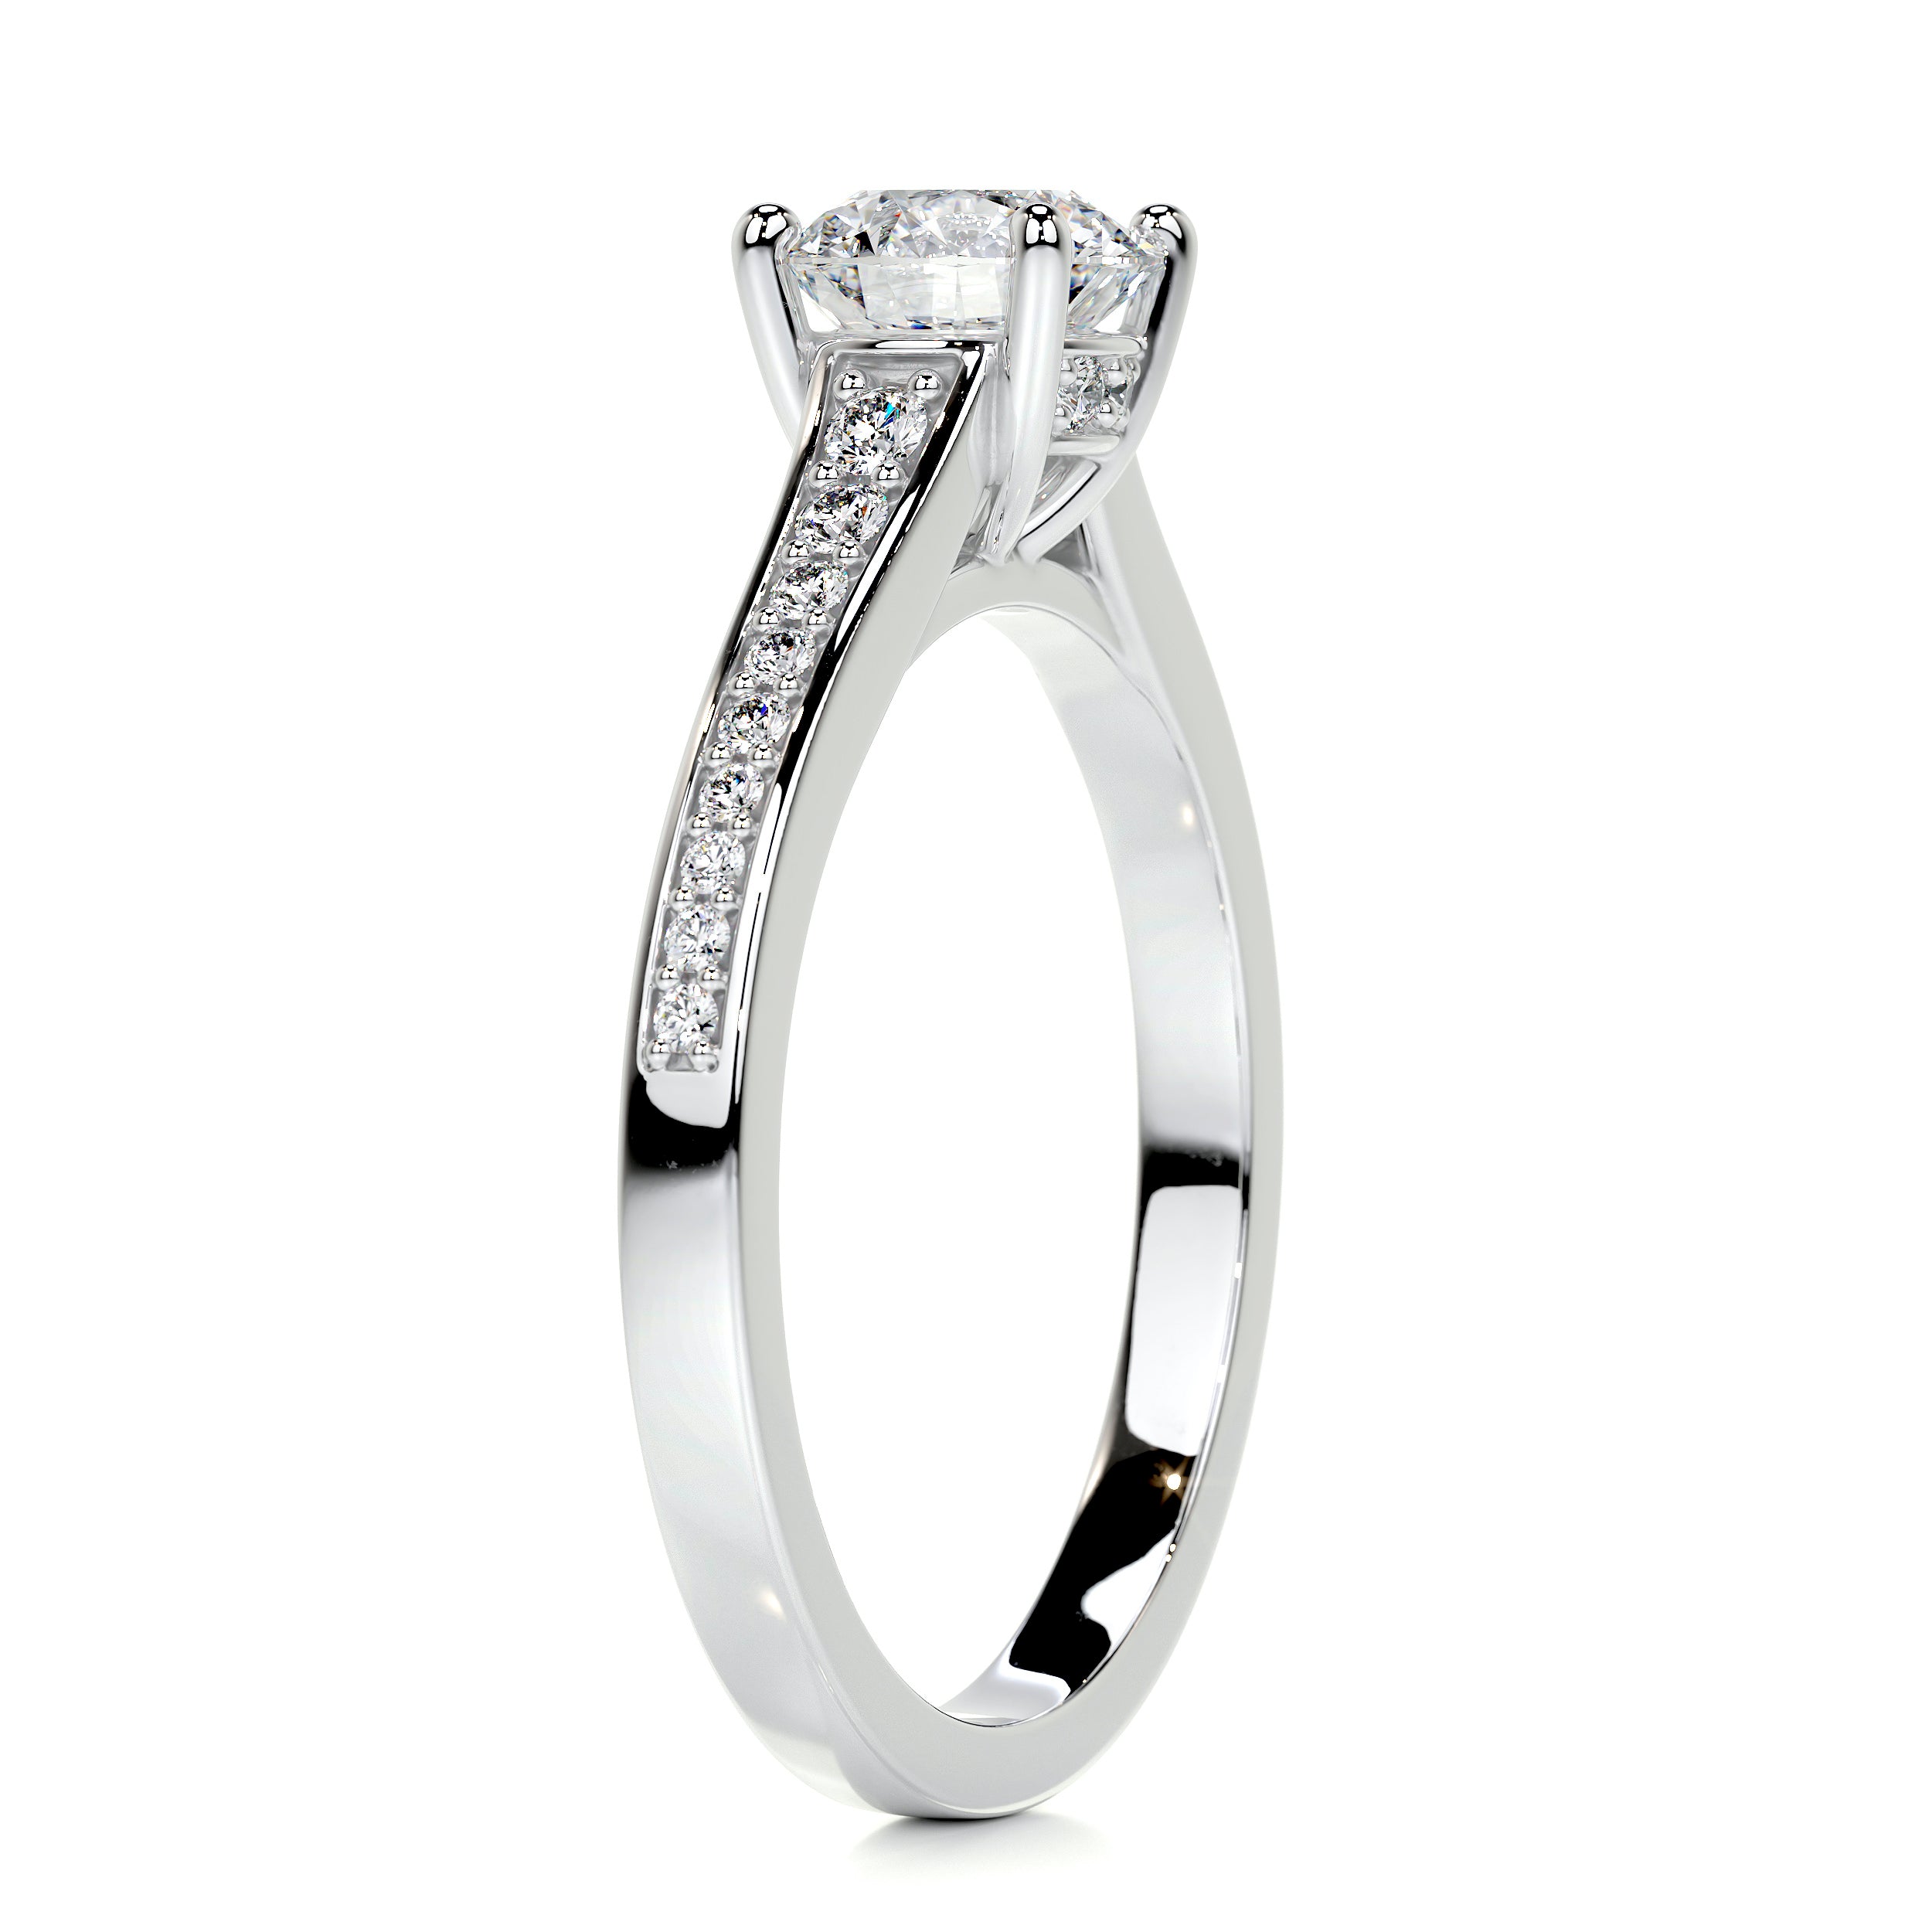 Lily Diamond Engagement Ring   (1.00 Carat) -14K White Gold